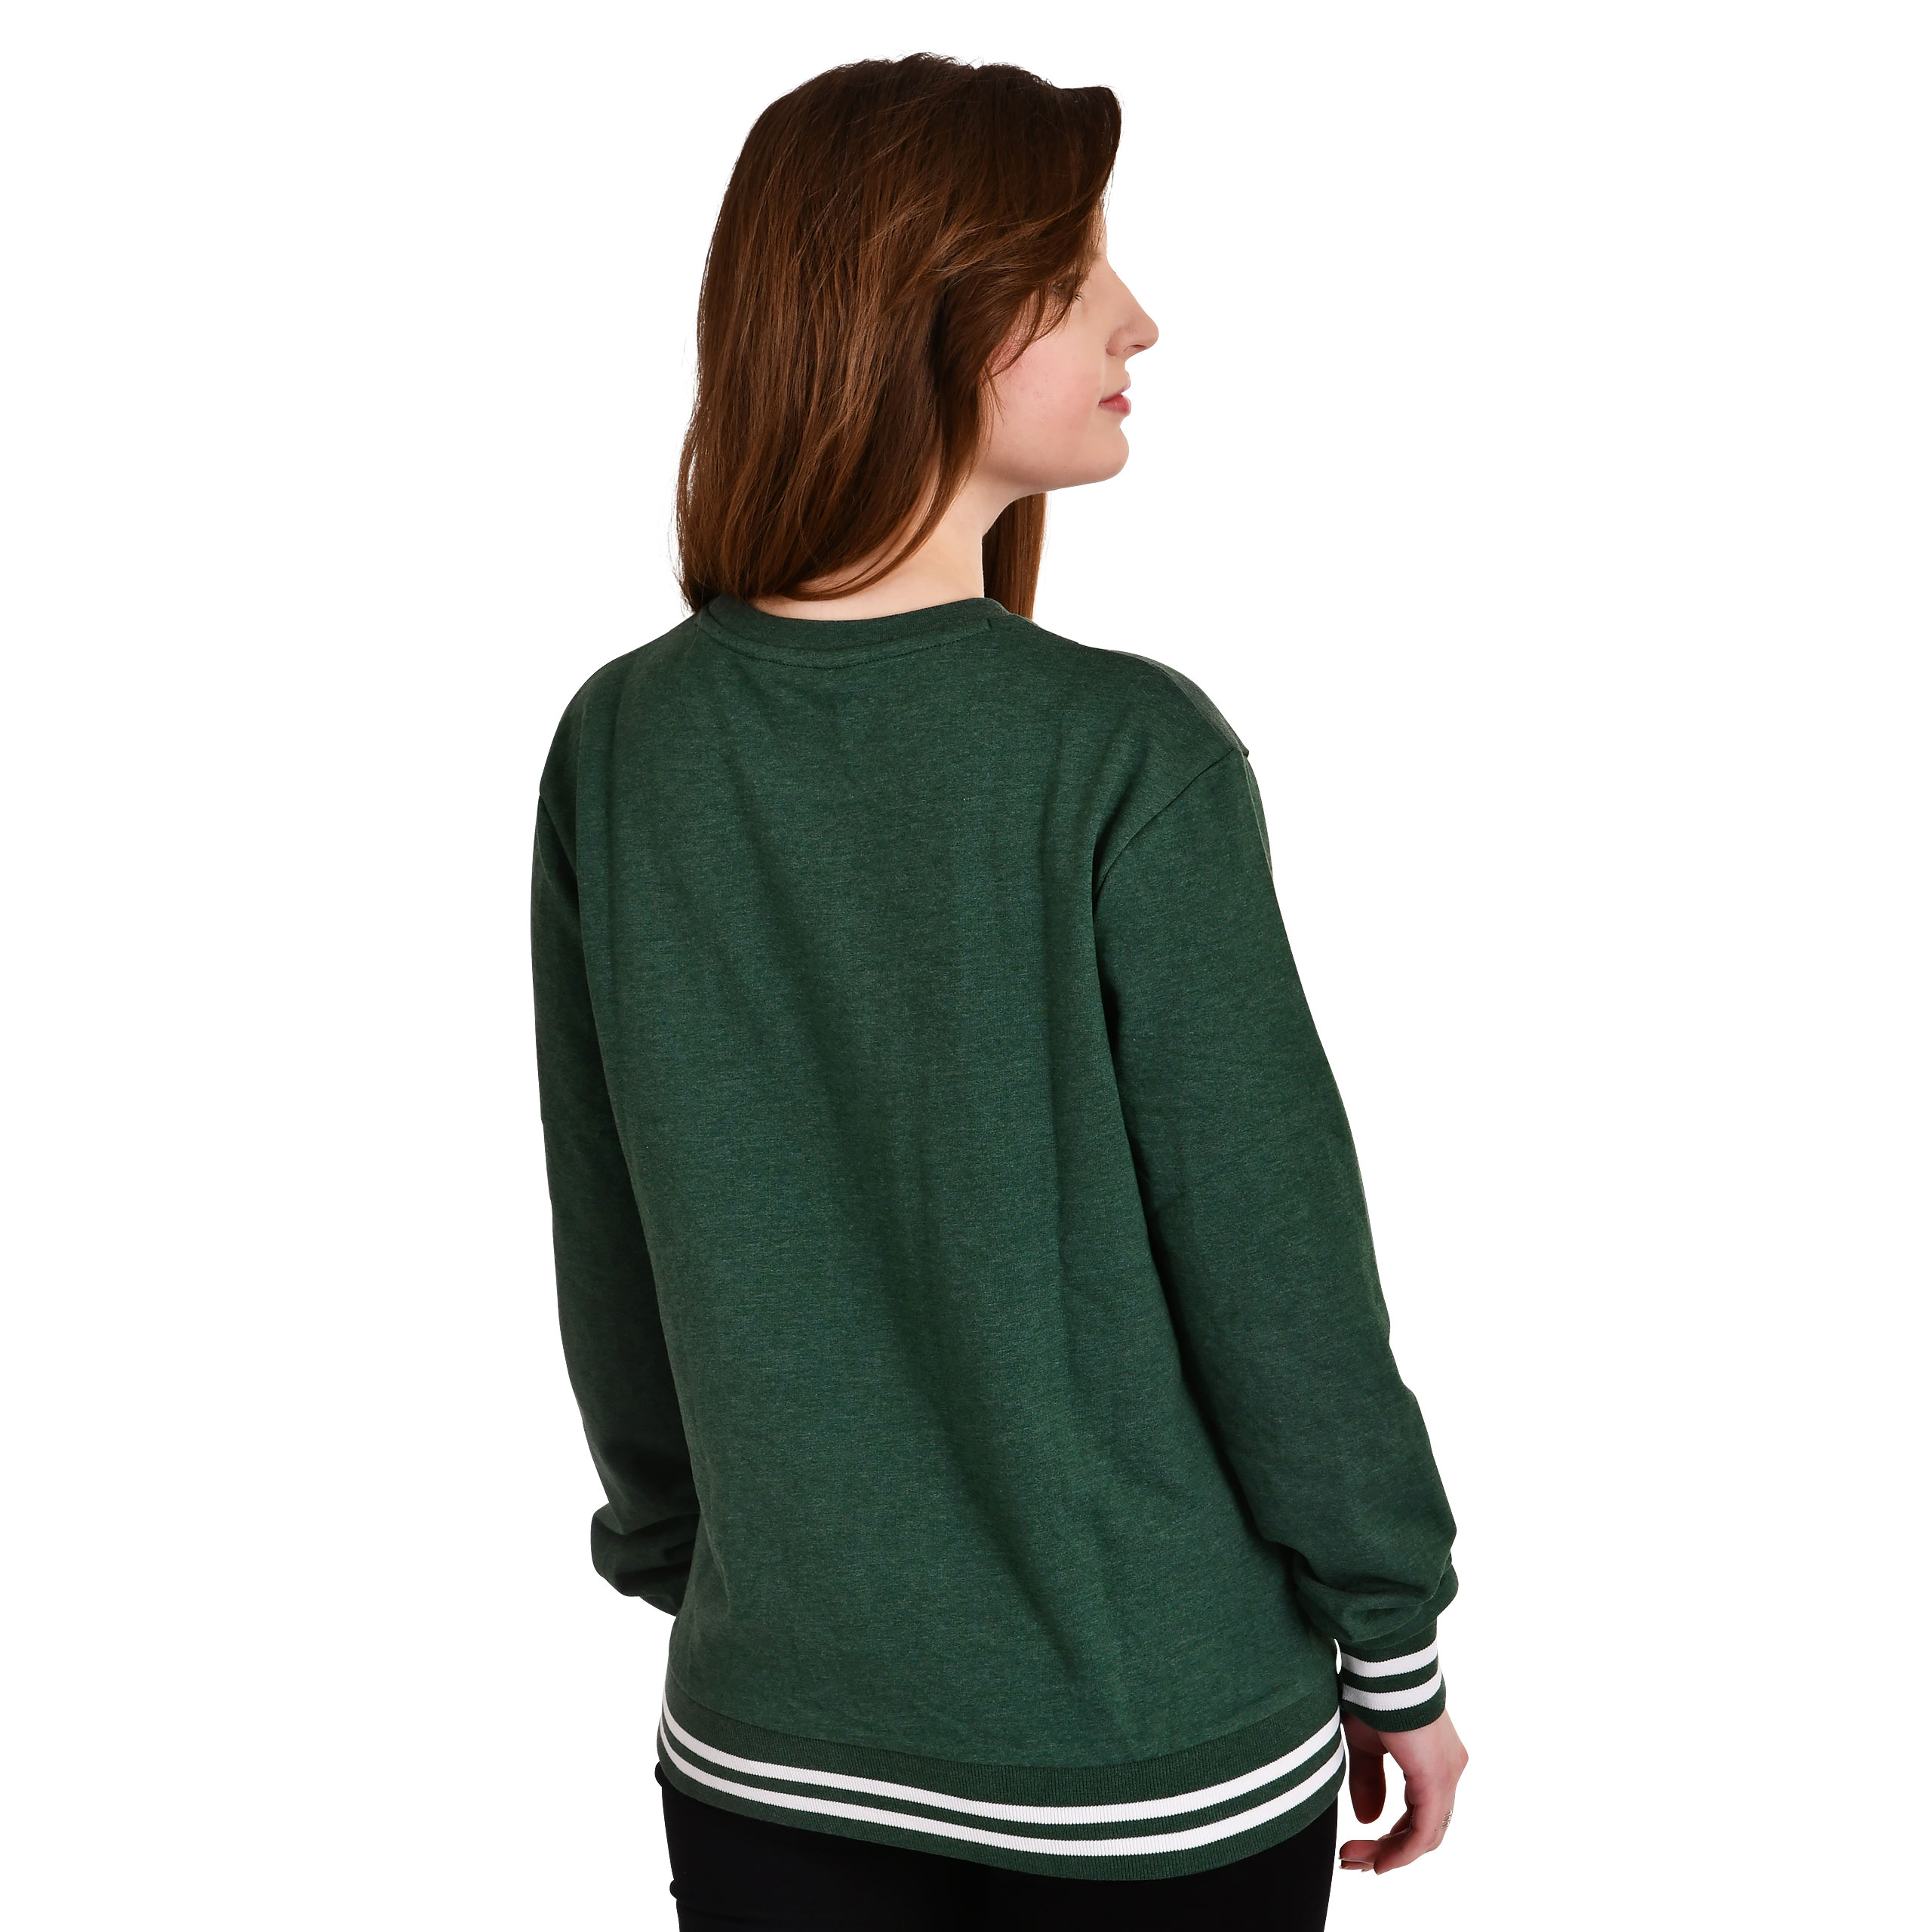 Harry Potter - Slytherin College Sweater grün